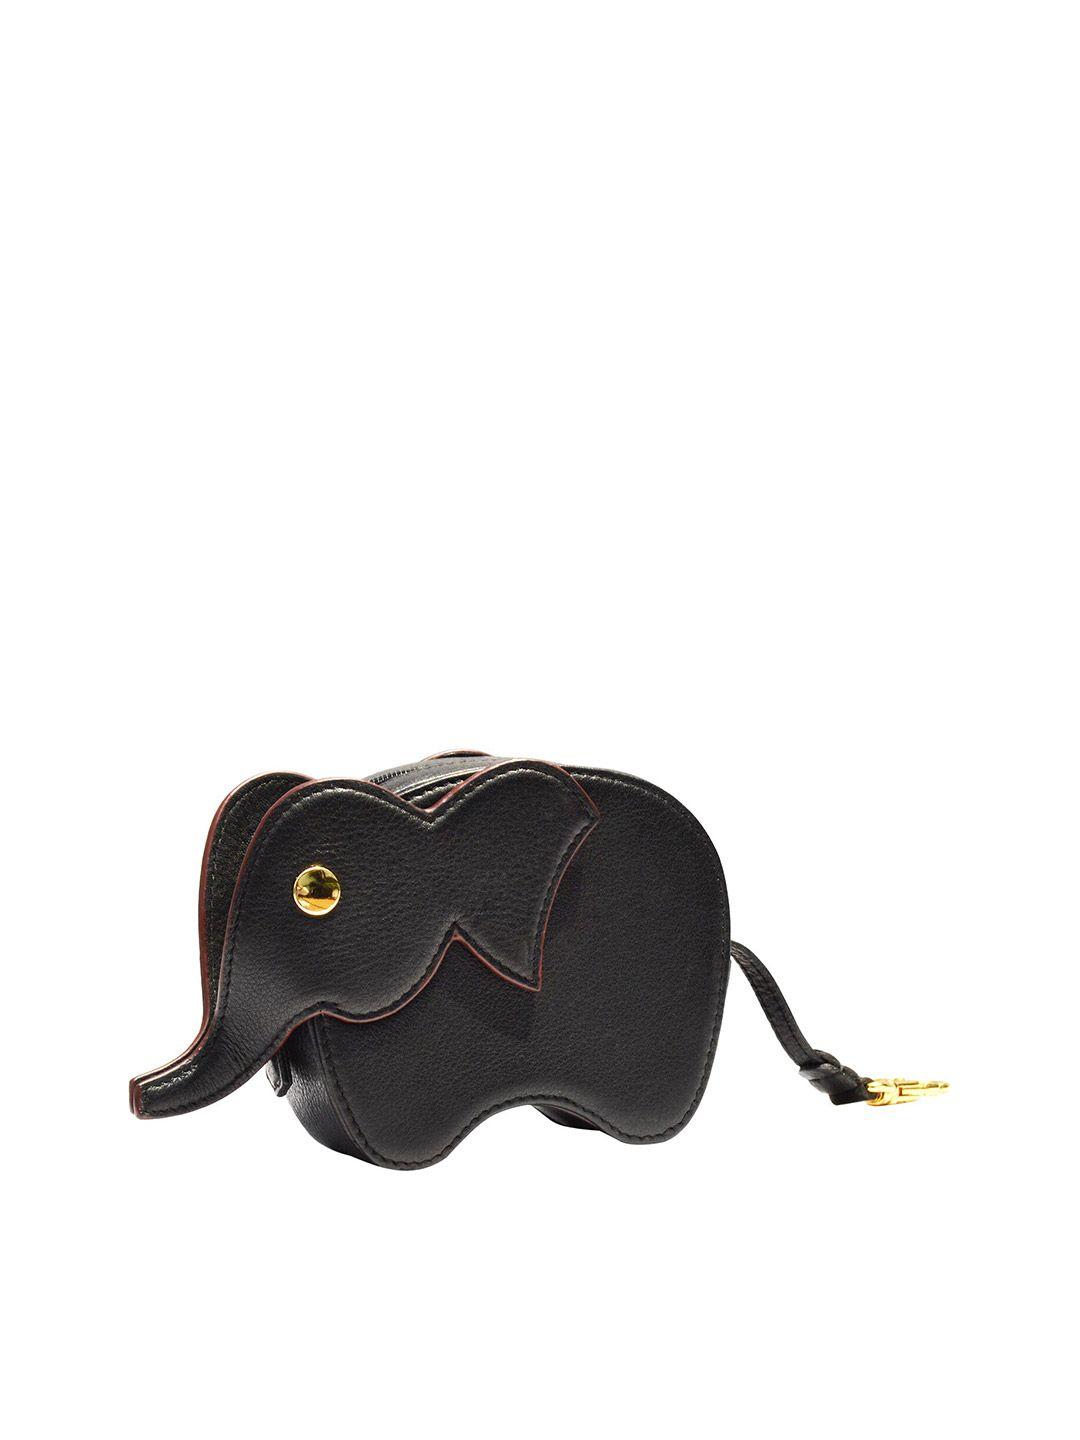 immri black solid leather mini purse